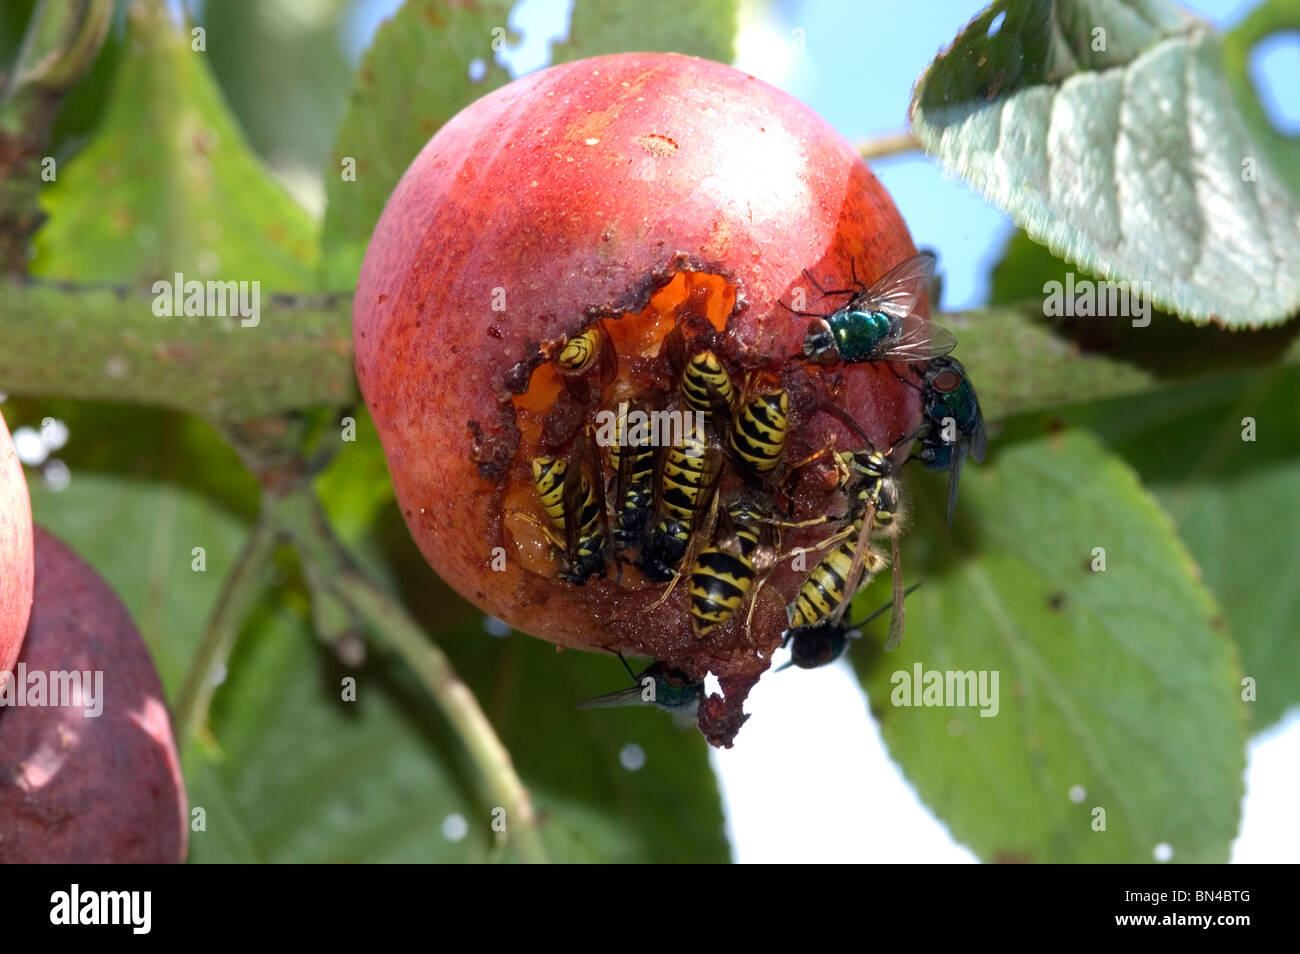 Wasps (Vespula vulgaris) and blowfly on damaged ripe plums on the tree Stock Photo